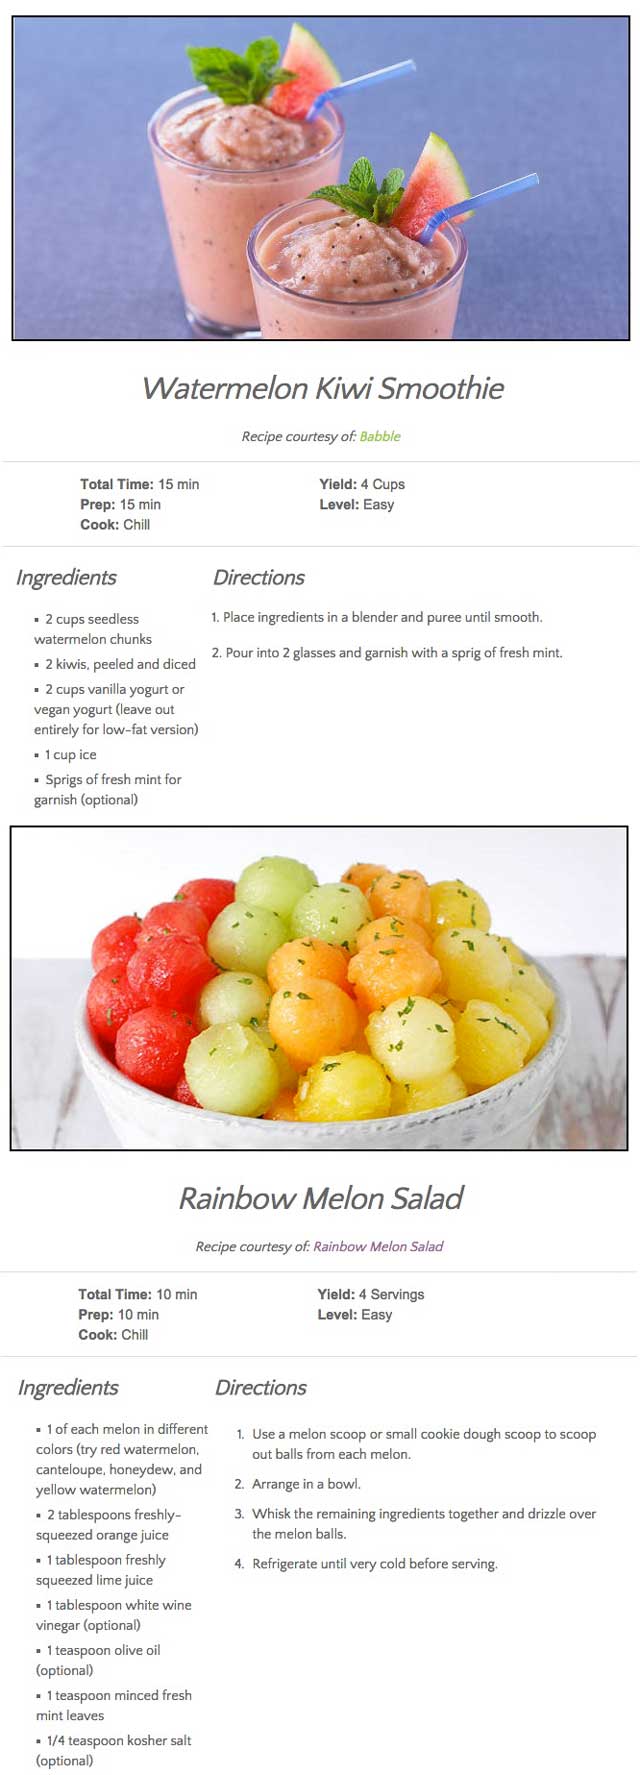 Melon recipes, One Community